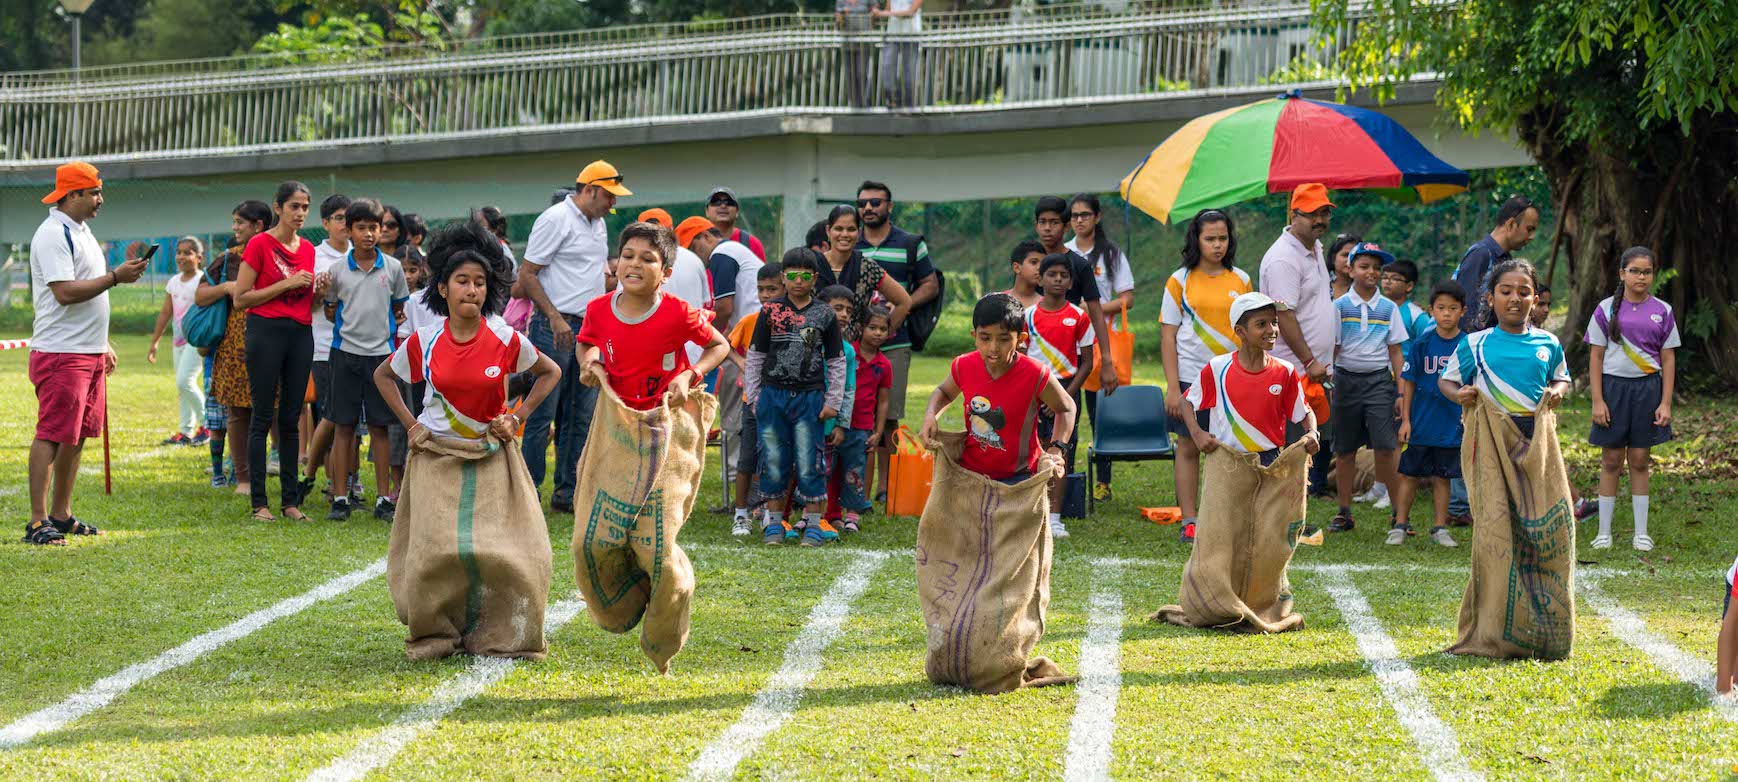 Bharatiya Games initiative to popularise traditional Indian sports